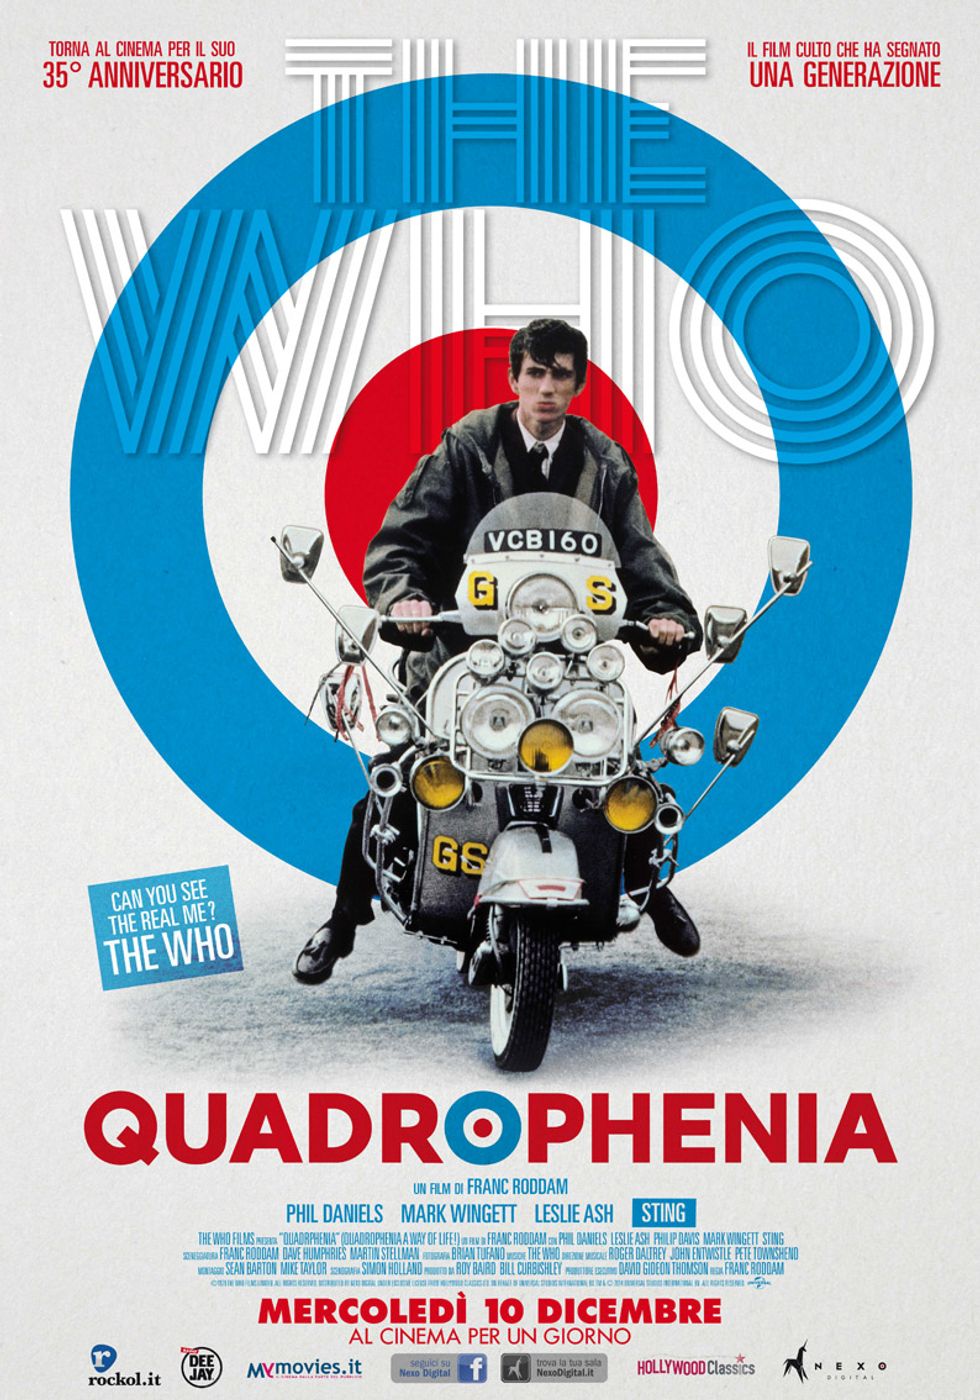 Who: "Quadrophenia" torna al cinema